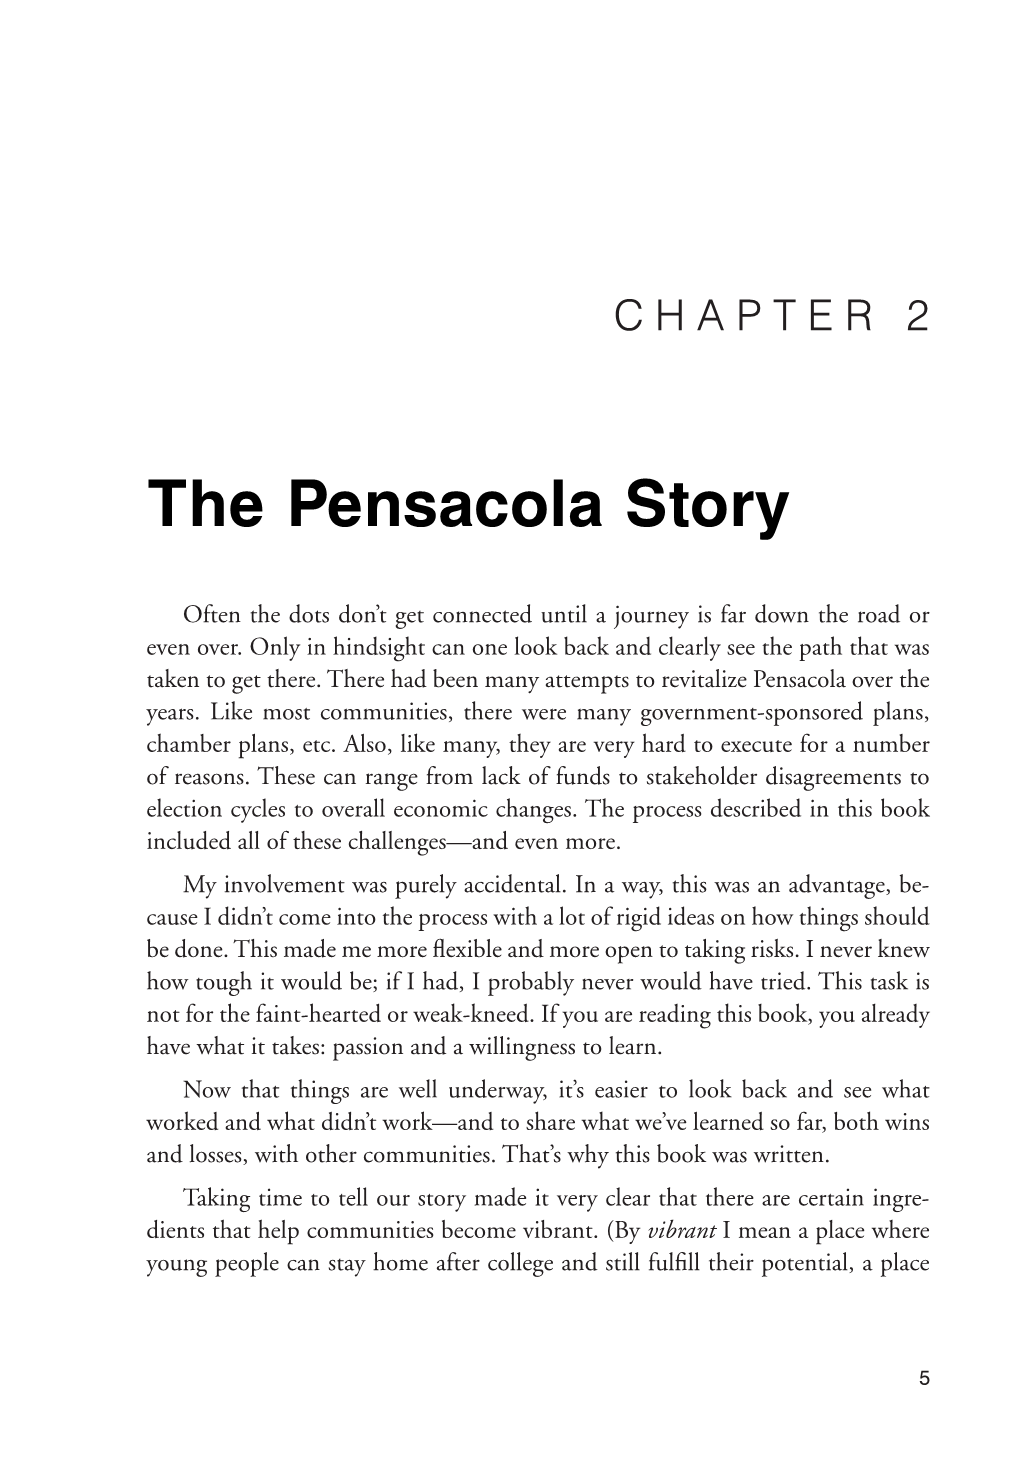 The Pensacola Story